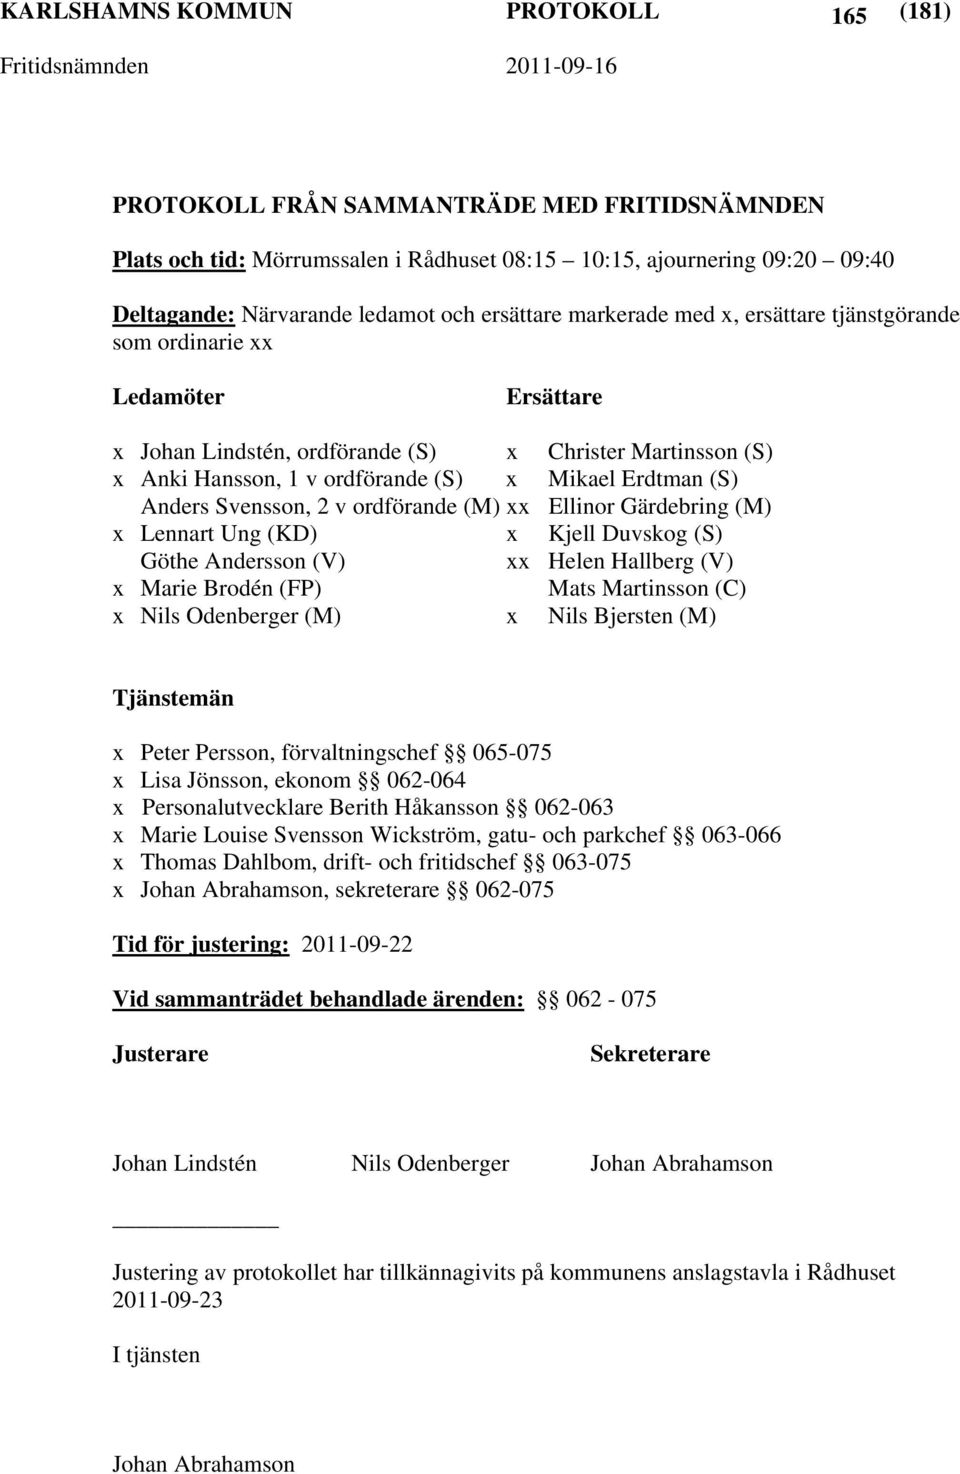 (S) Anders Svensson, 2 v ordförande (M) xx Ellinor Gärdebring (M) x Lennart Ung (KD) x Kjell Duvskog (S) Göthe Andersson (V) xx Helen Hallberg (V) x Marie Brodén (FP) Mats Martinsson (C) x Nils